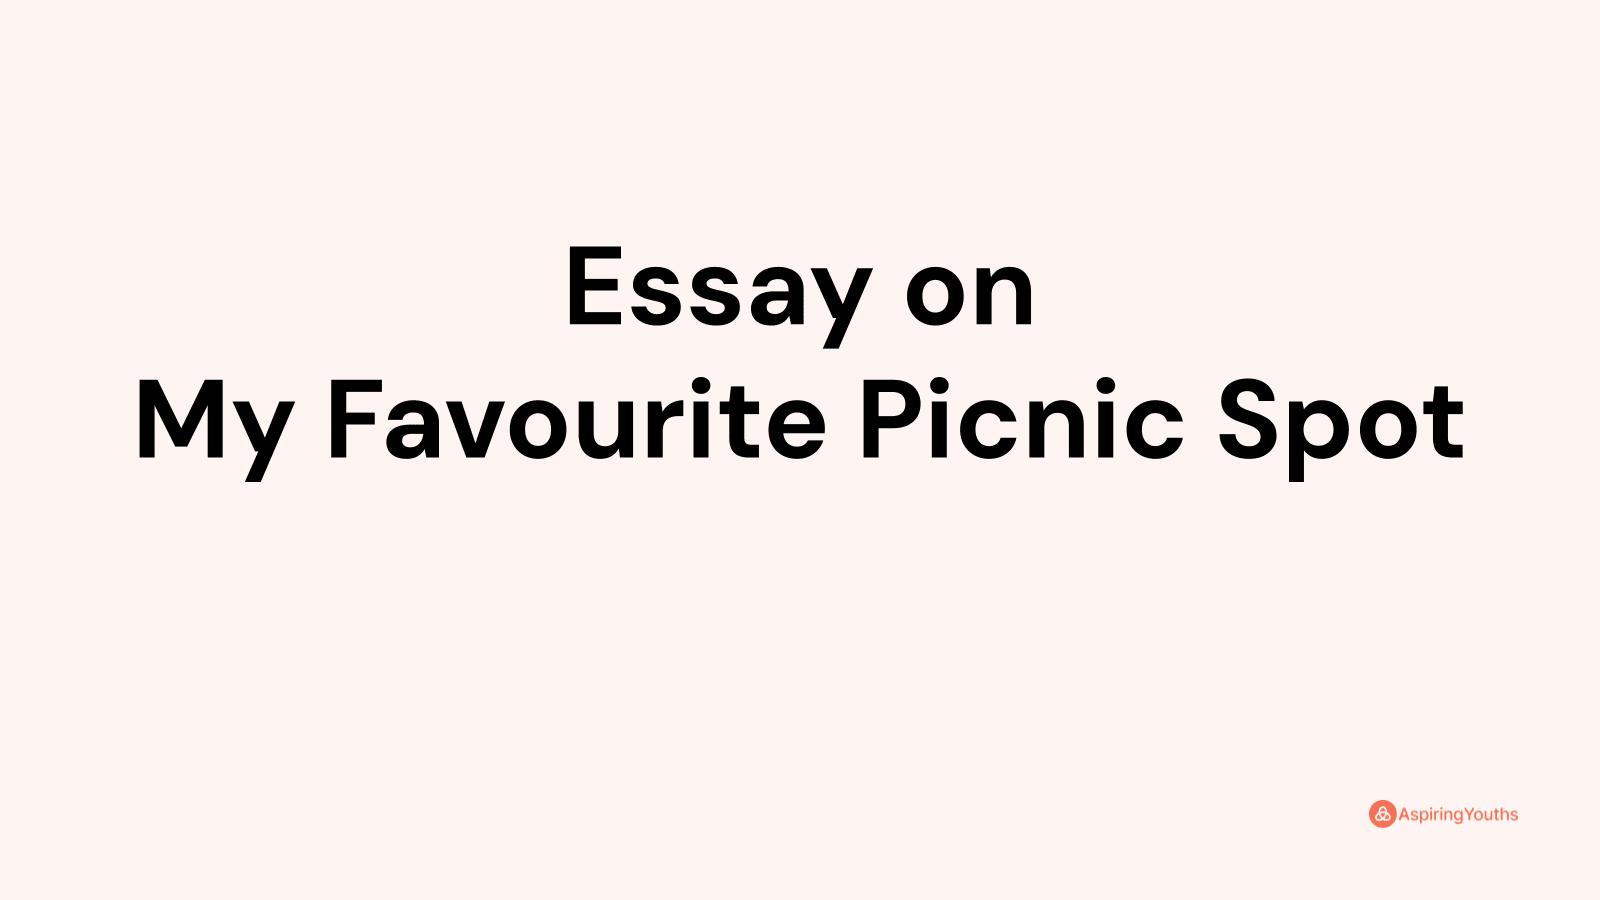 Essay on My Favourite Picnic Spot